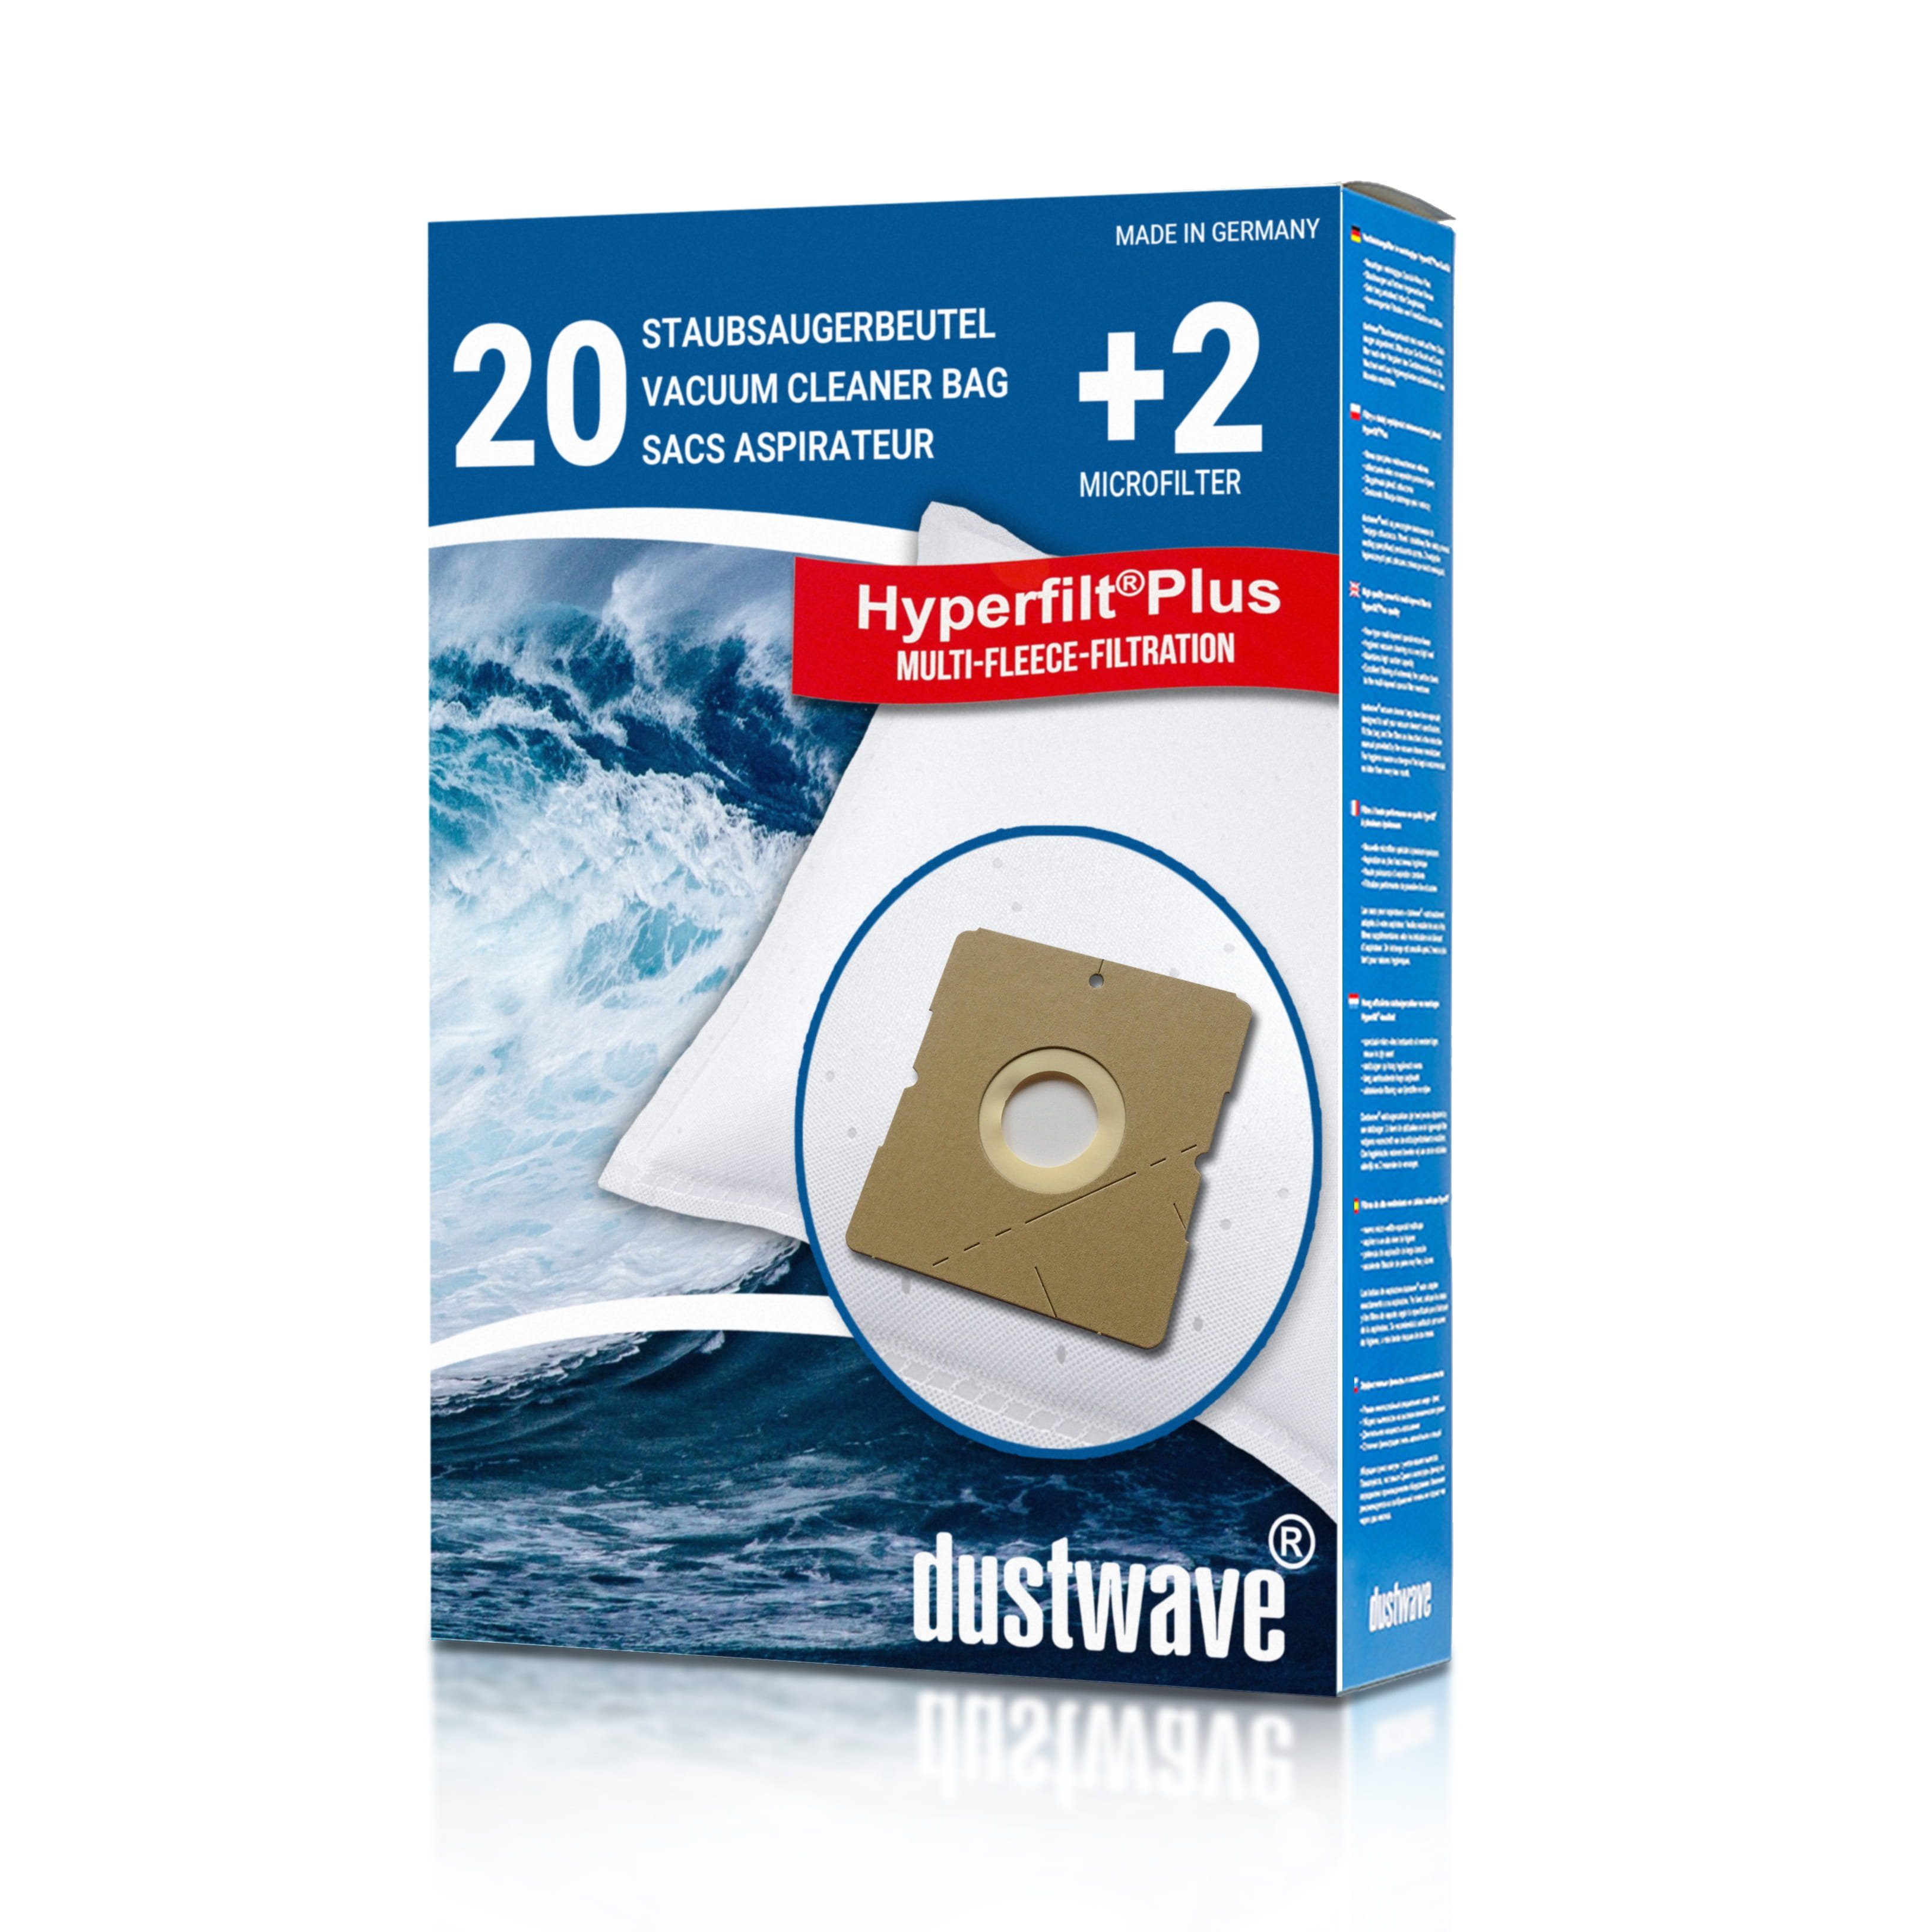 Dustwave Staubsaugerbeutel Megapack, passend für AmazonBasics W11, 20 St., Megapack, 20 Staubsaugerbeutel + 2 Hepa-Filter (ca. 15x15cm - zuschneidbar)